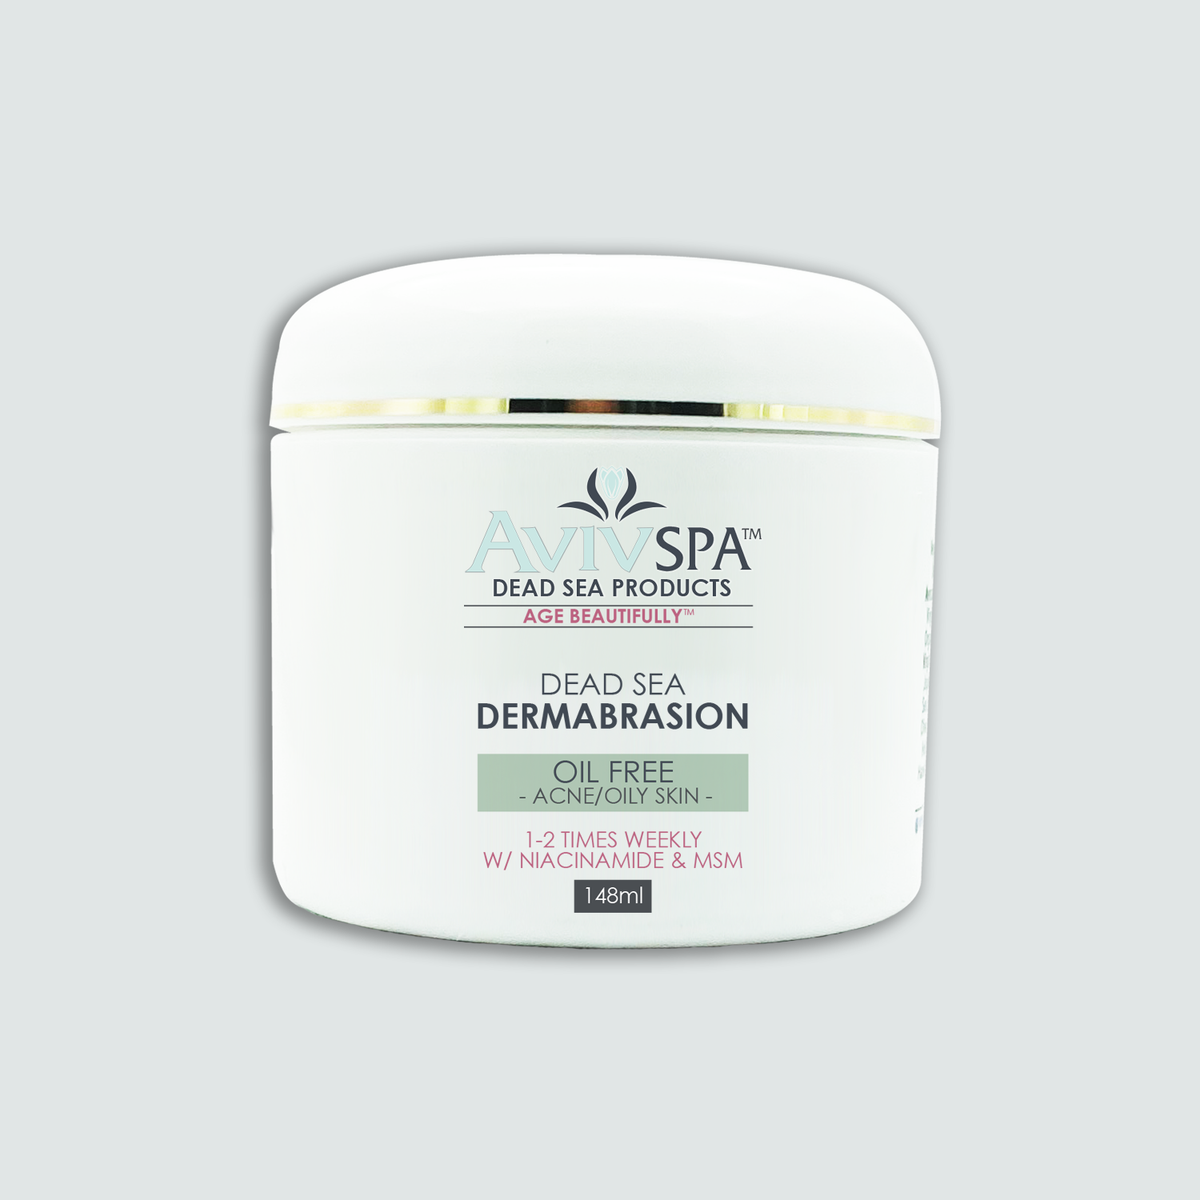 Dead Sea Dermabrasion (OIL FREE) Acne/Oily Skin